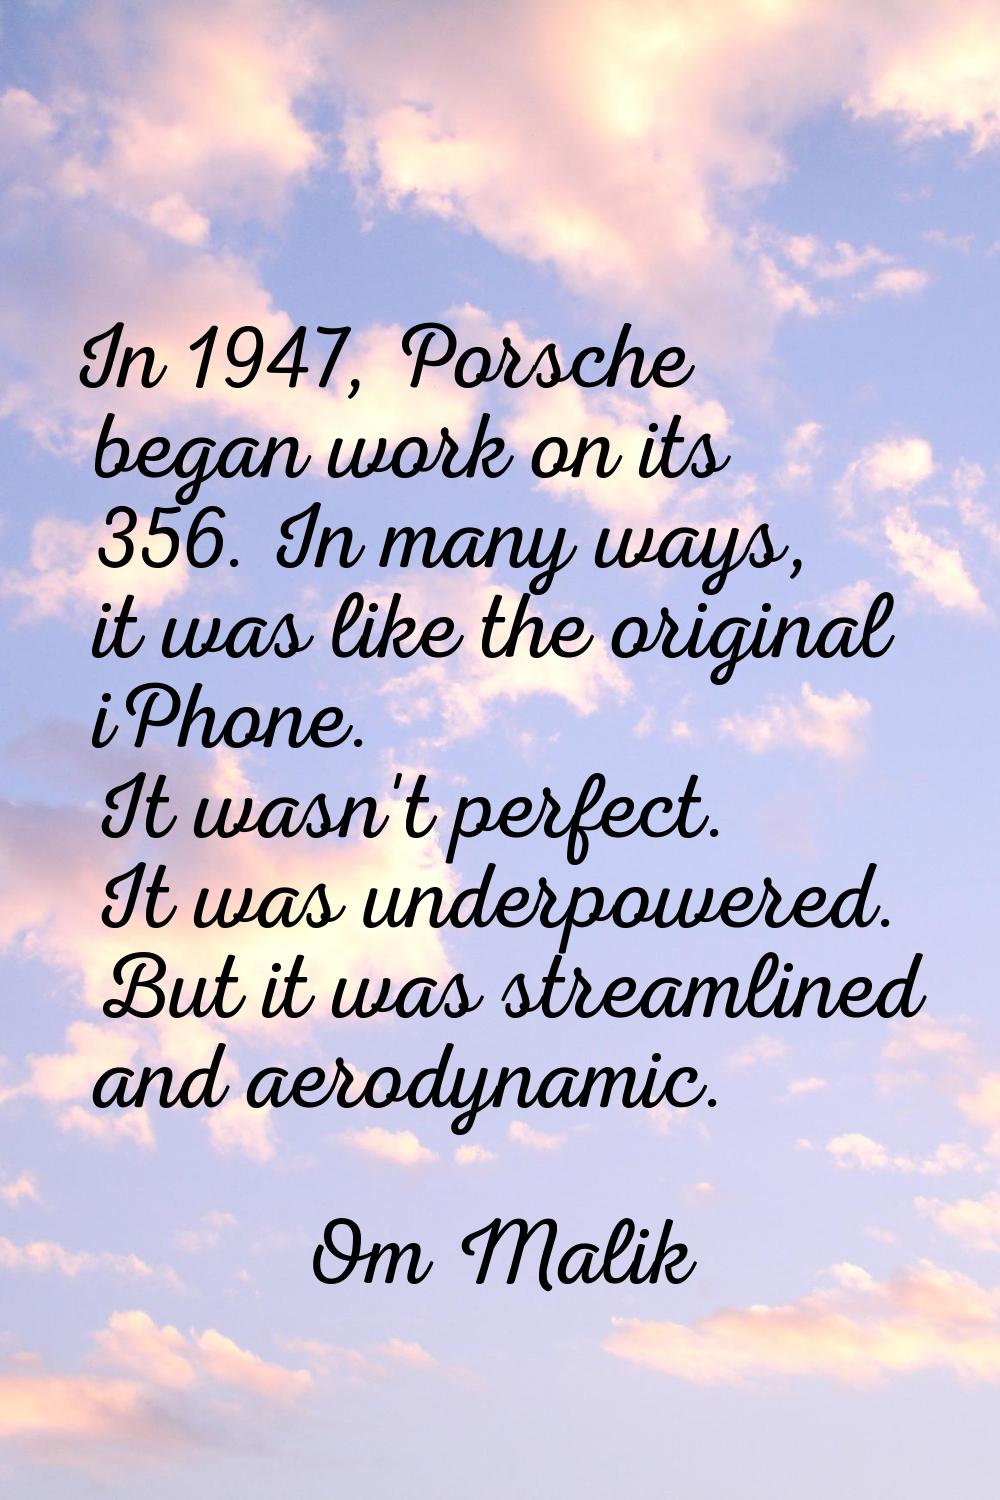 In 1947, Porsche began work on its 356. In many ways, it was like the original iPhone. It wasn't pe